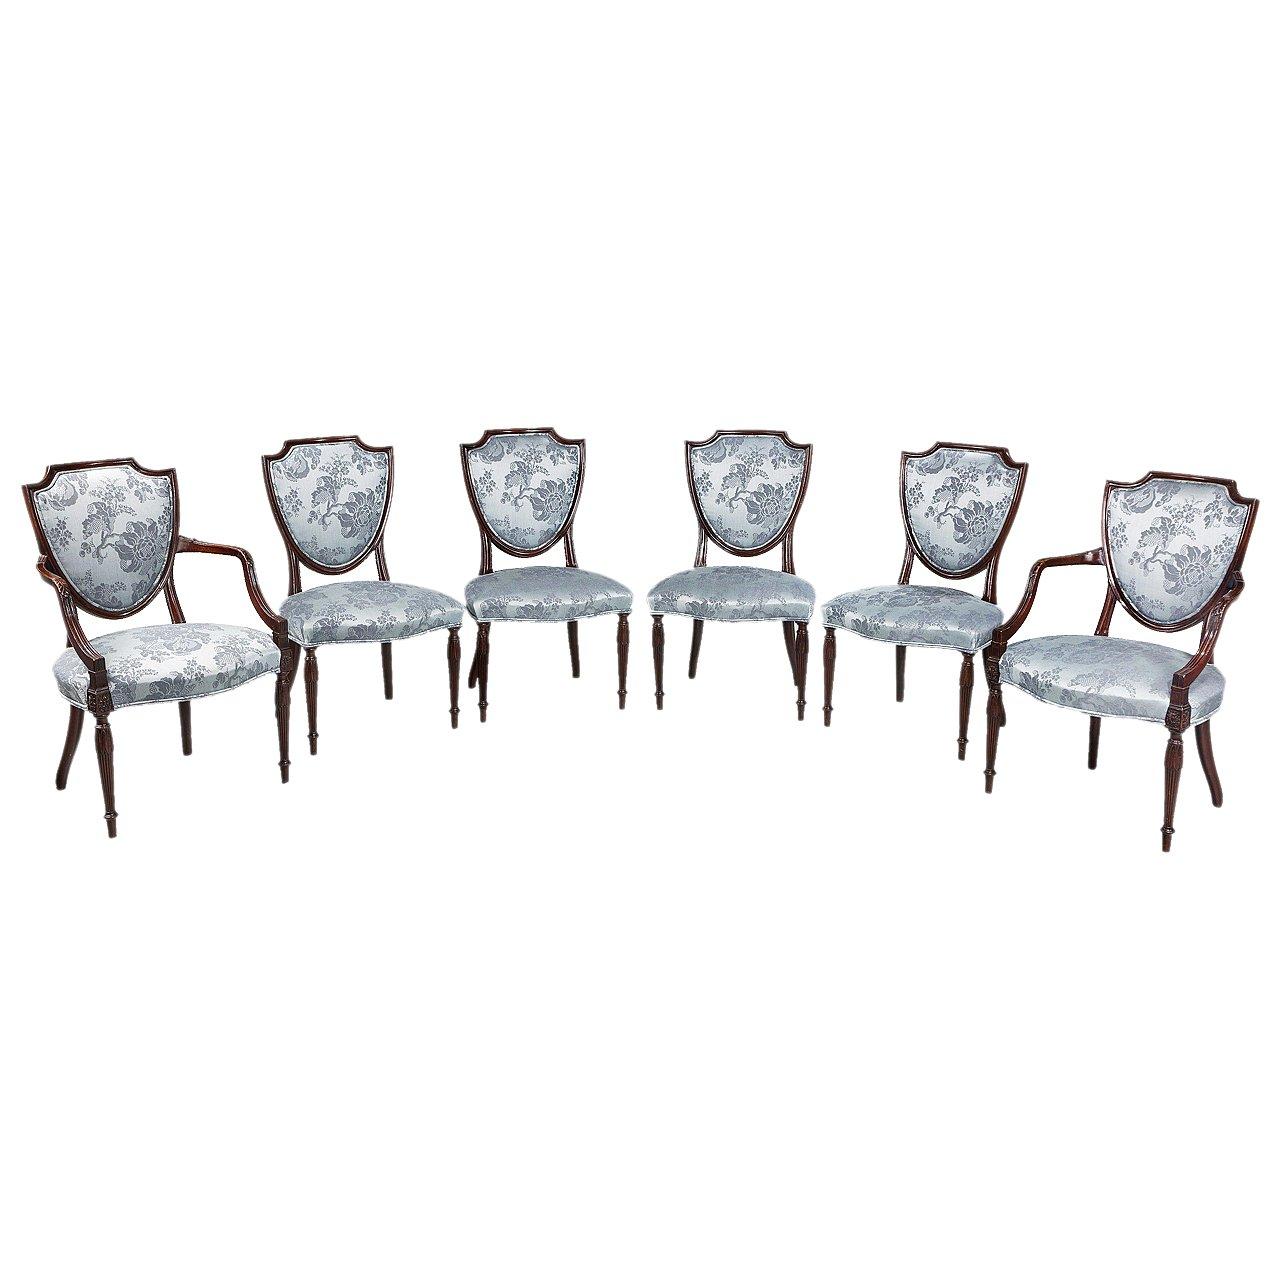 Set of Six Late 19th Century Hepplewhite Design Chairs